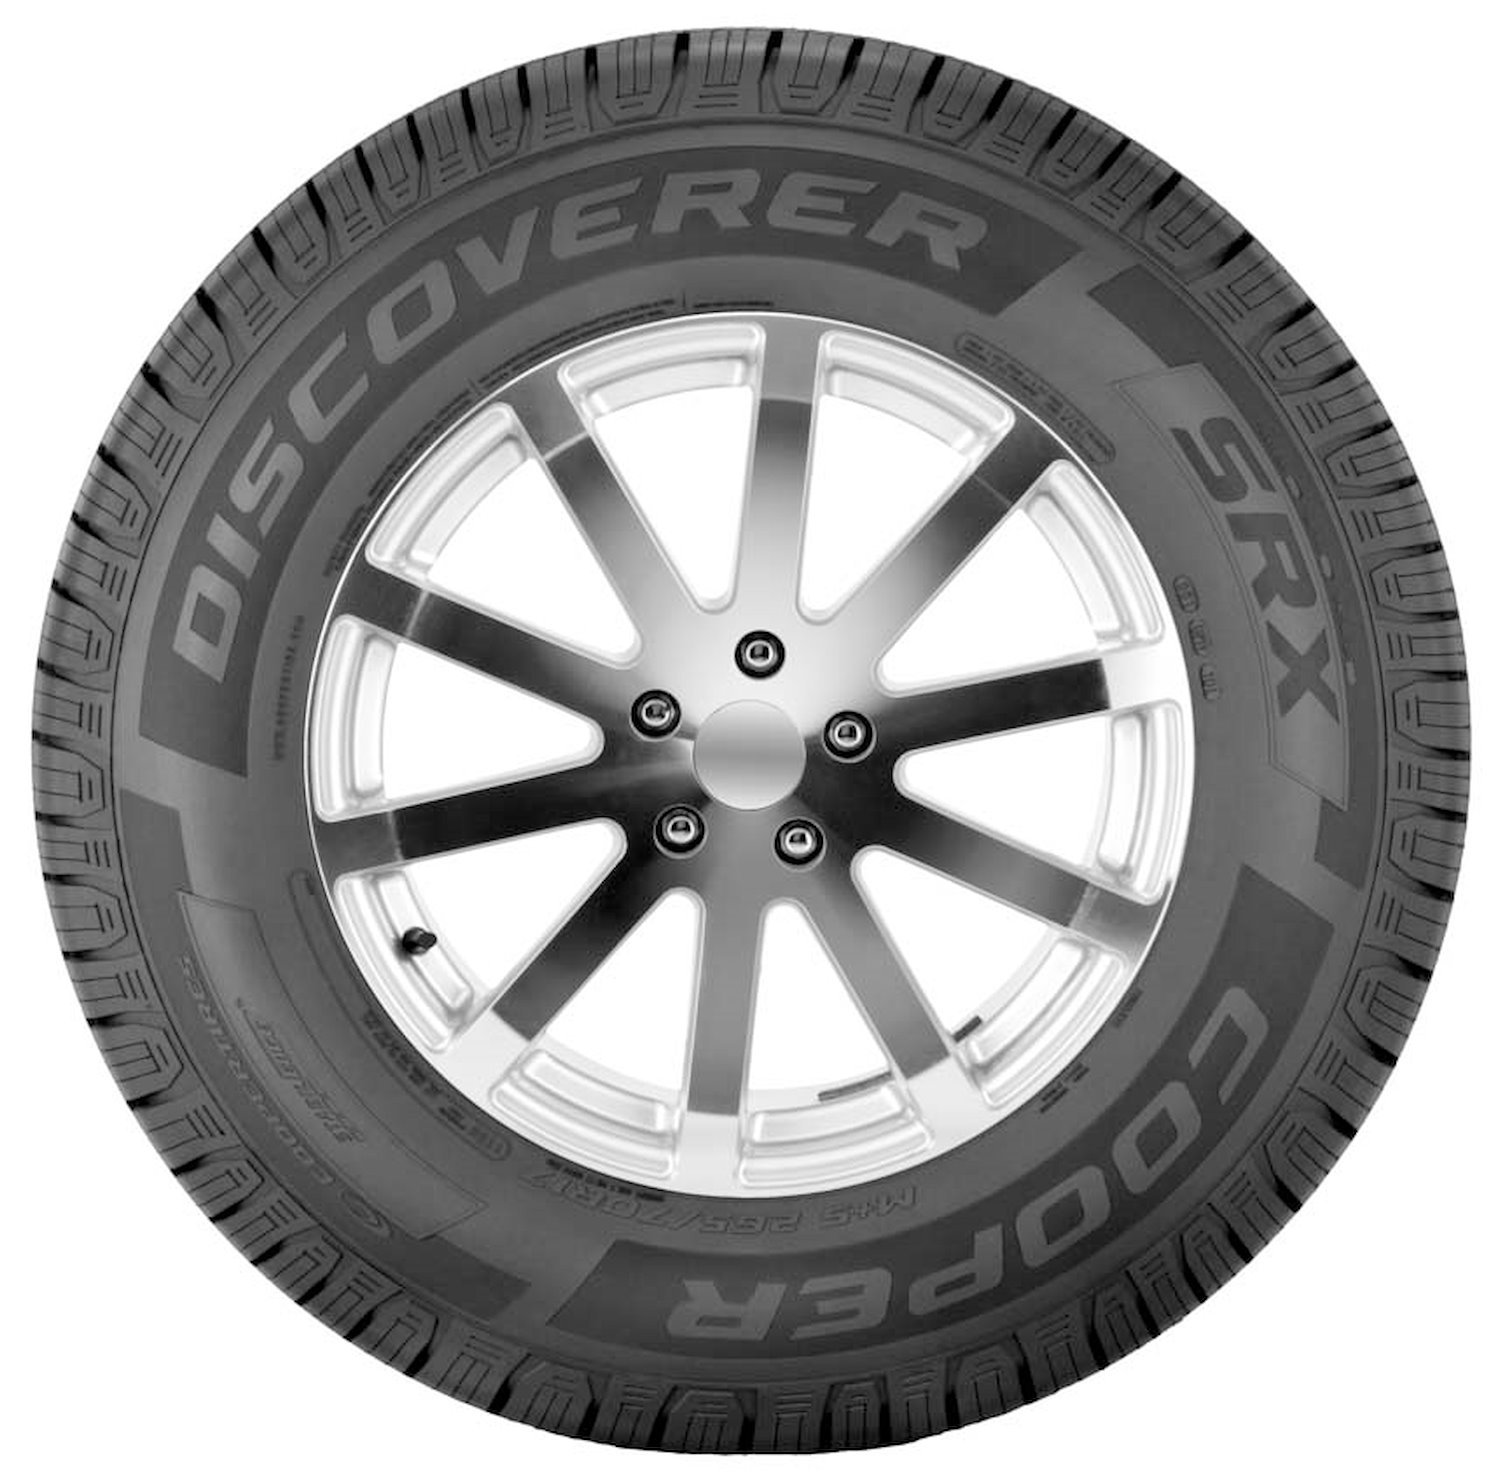 Discoverer SRX Commuter/Touring Tire, 215/70R16